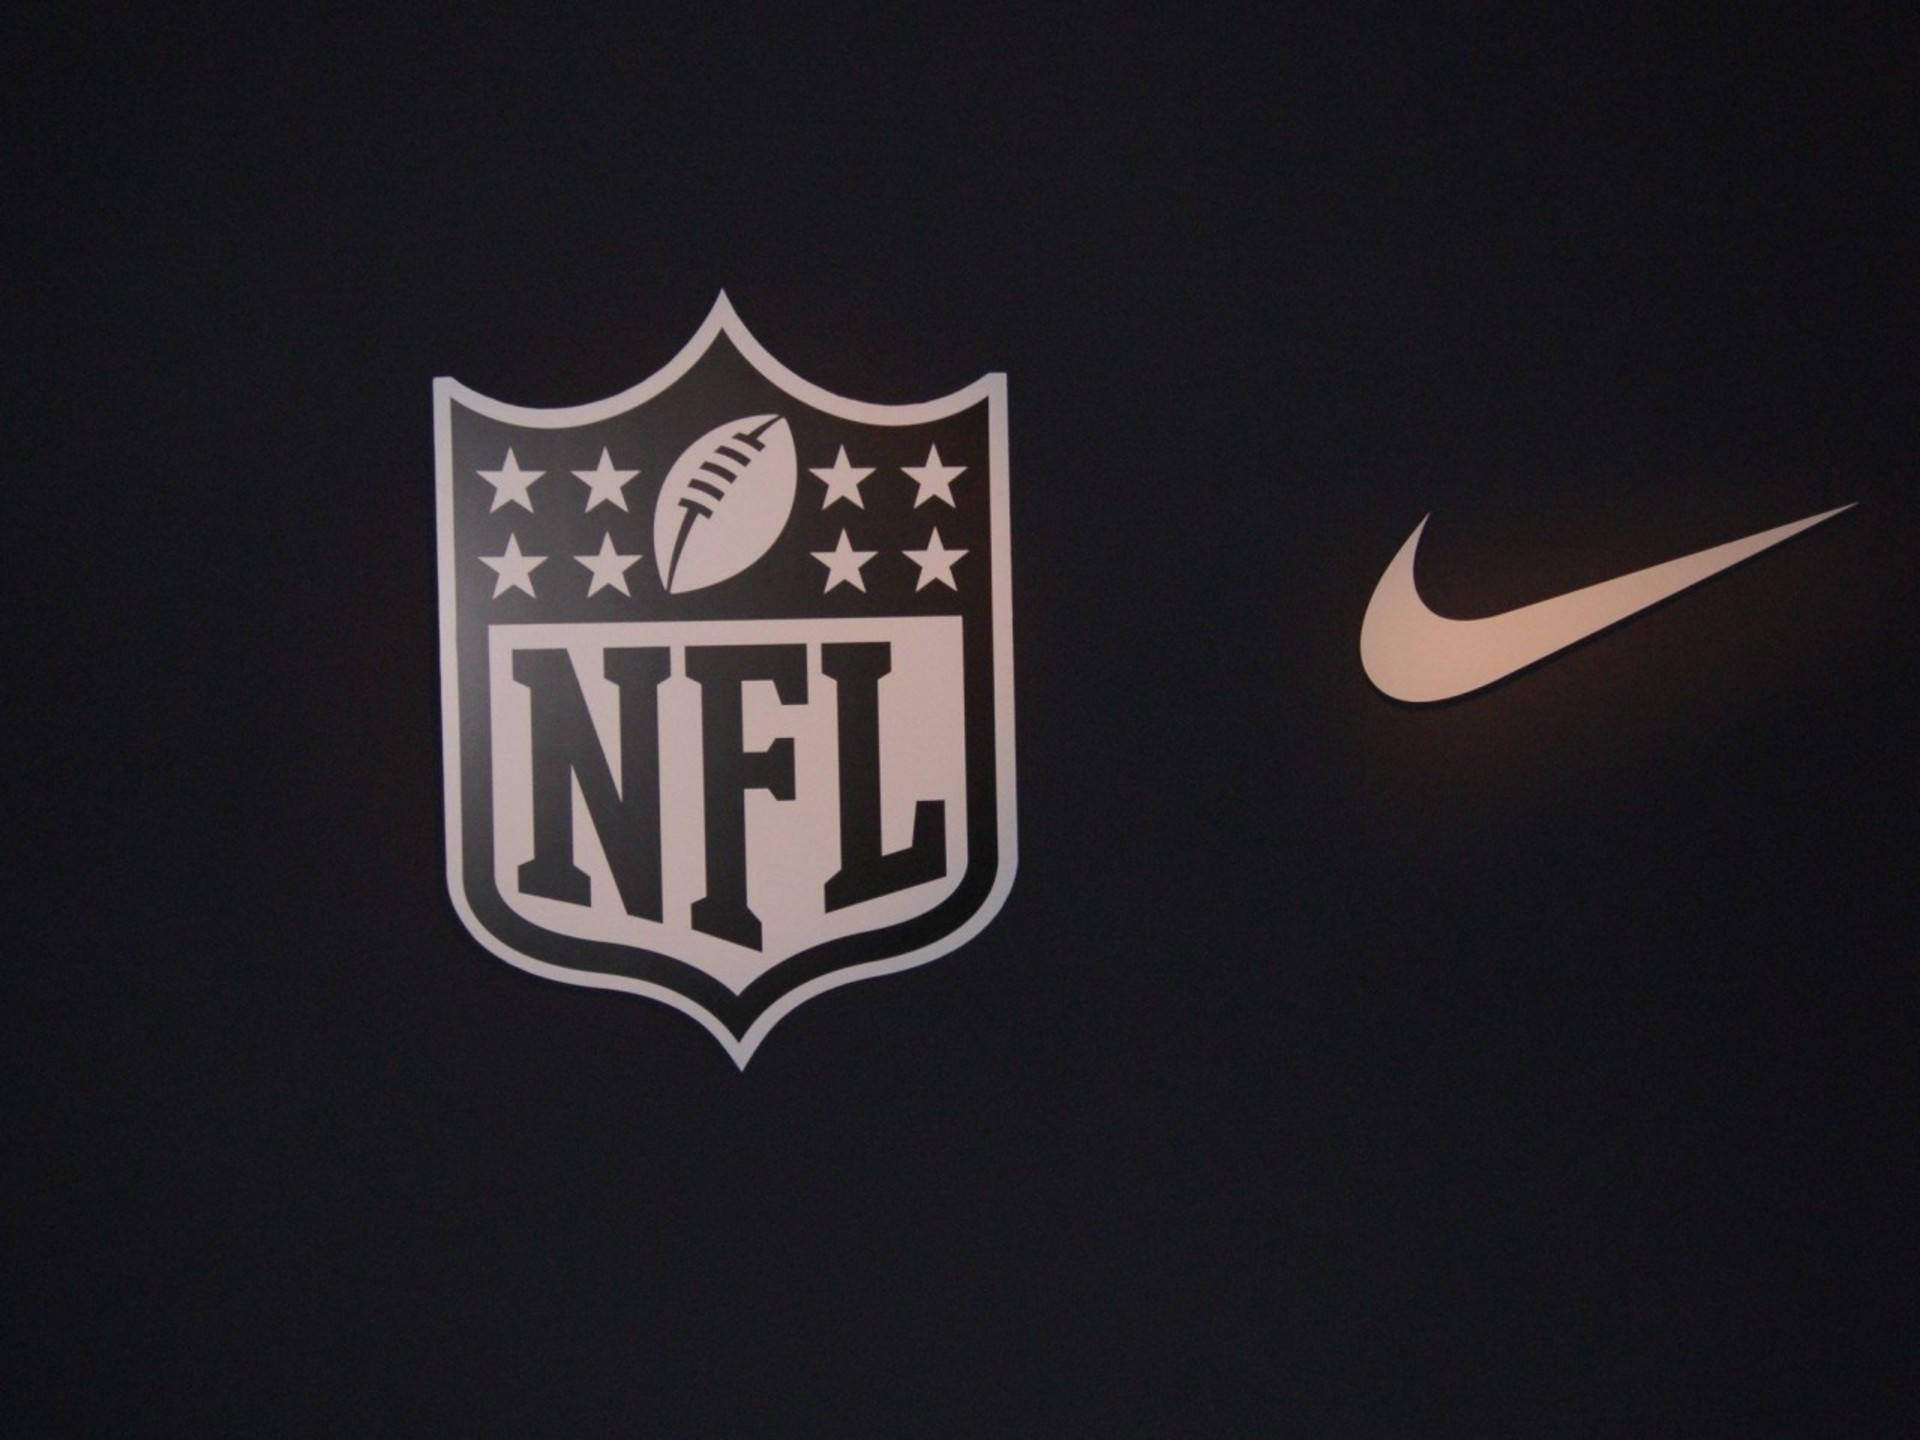 Nfl Football And Nike Logos